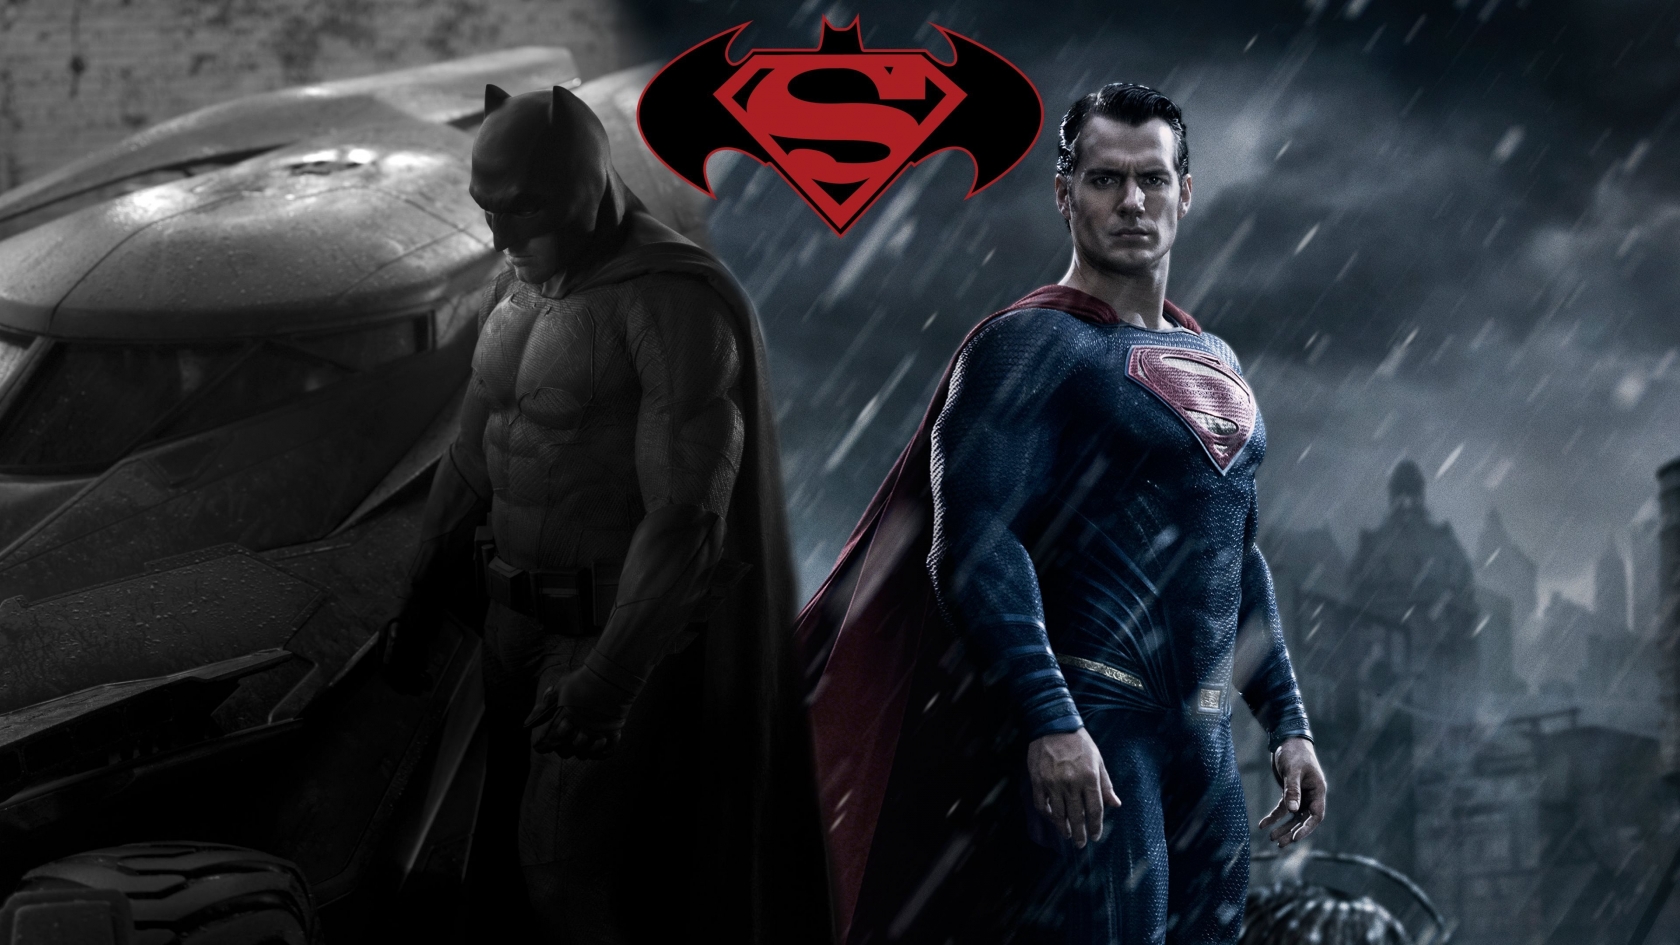 Batman vs Superman Fan Art for 1680 x 945 HDTV resolution